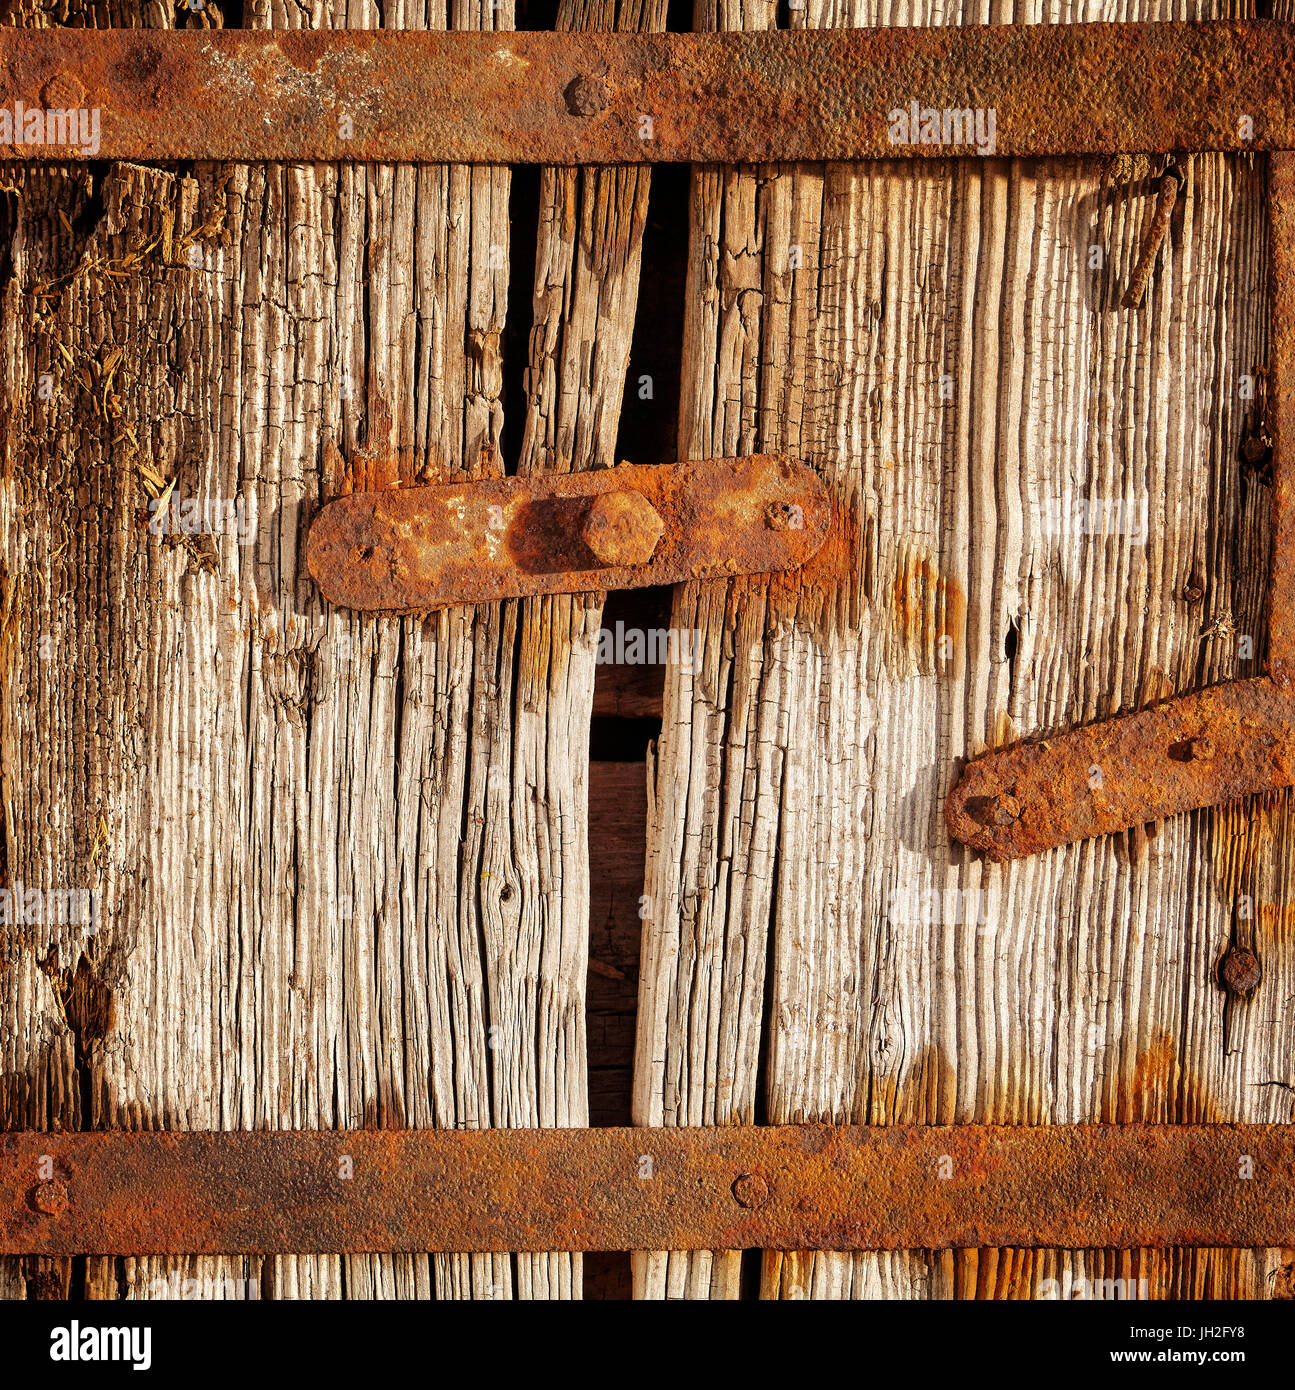 10 Rustic Barn Wood Wallpaper Backgrounds that Mimic Real Wood  Homenish